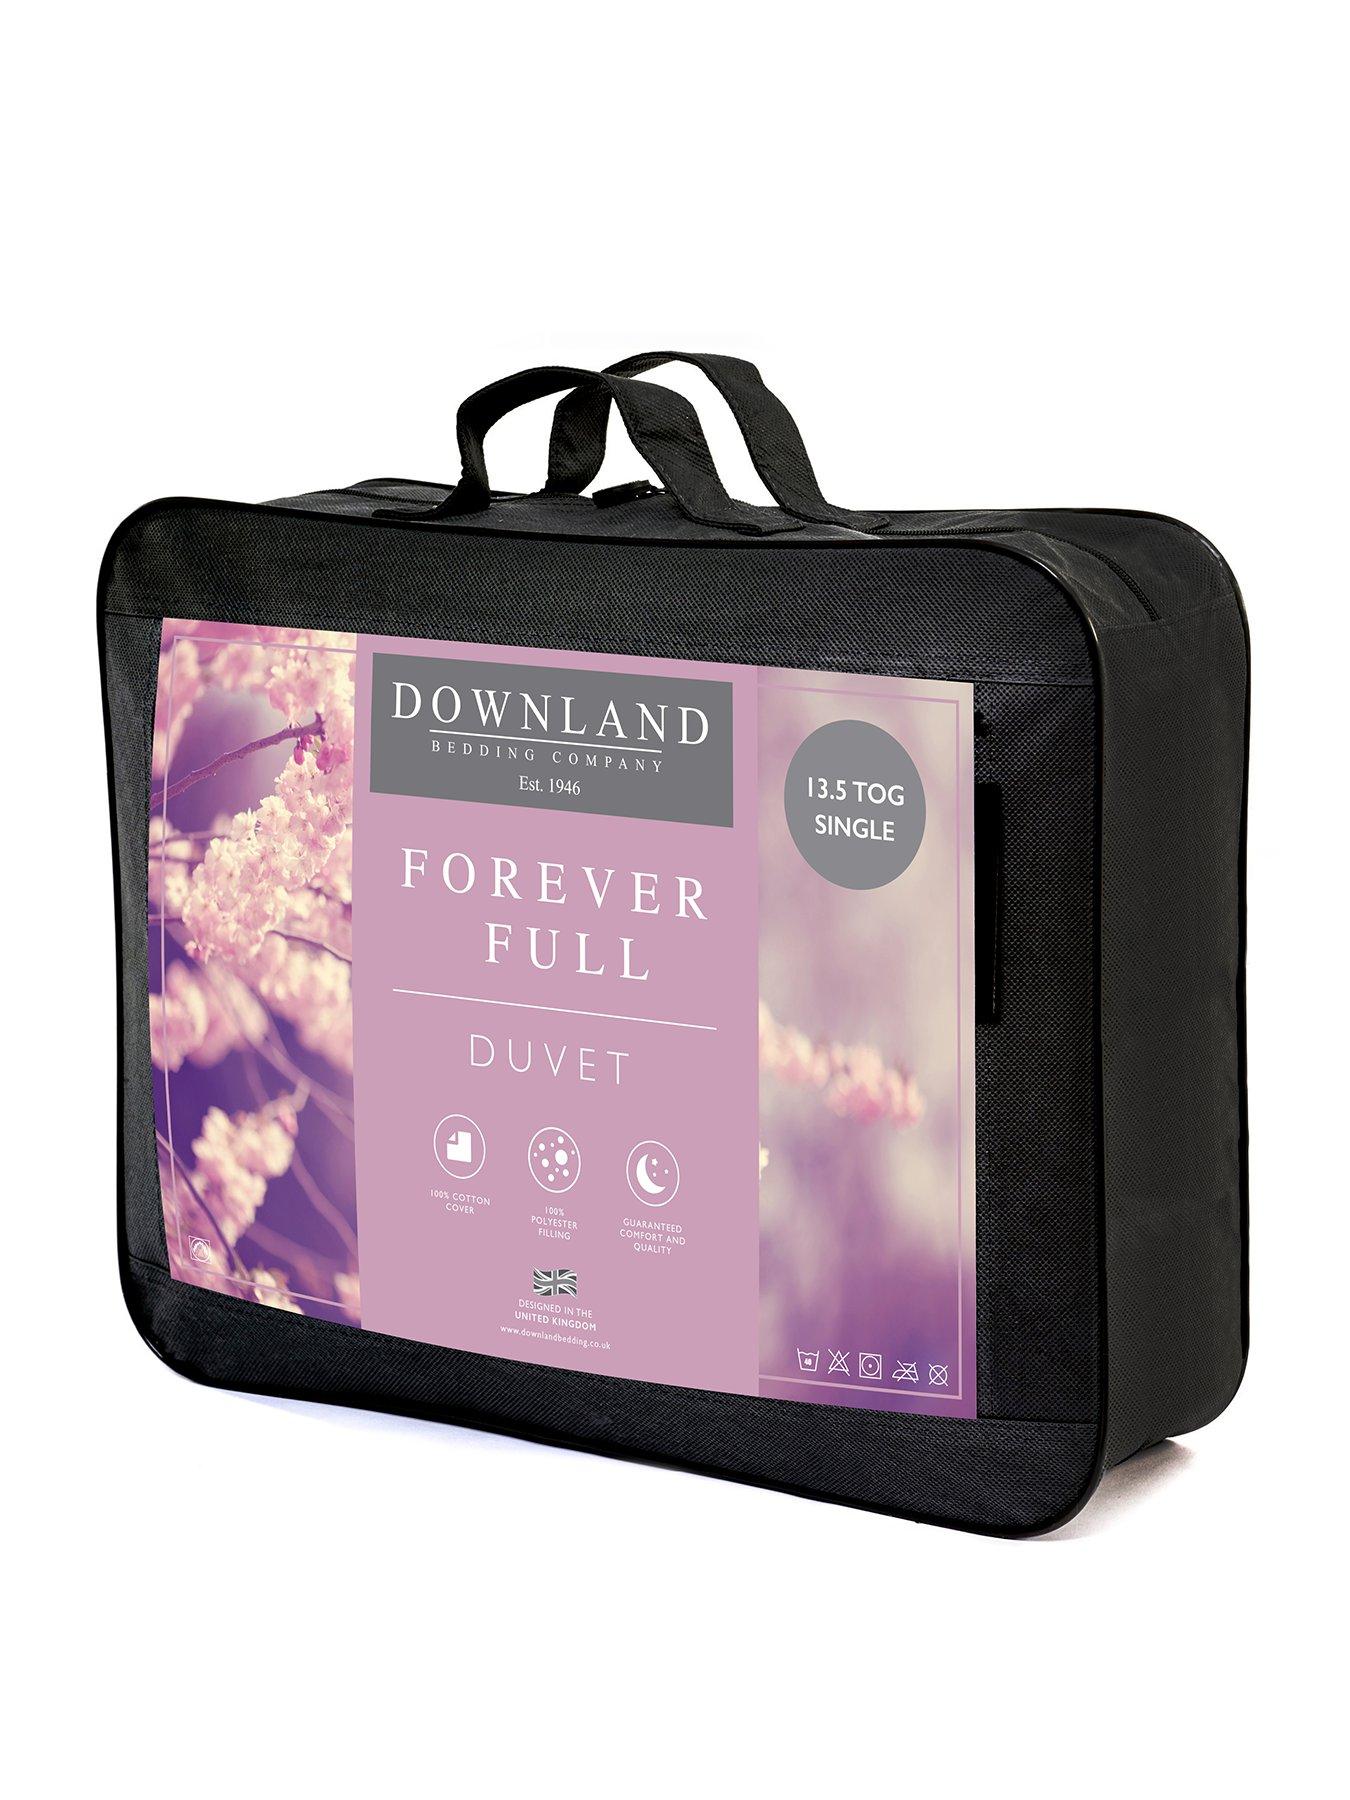 Product photograph of Downland Forever Full 13 5 Tog Single Duvet - White from very.co.uk